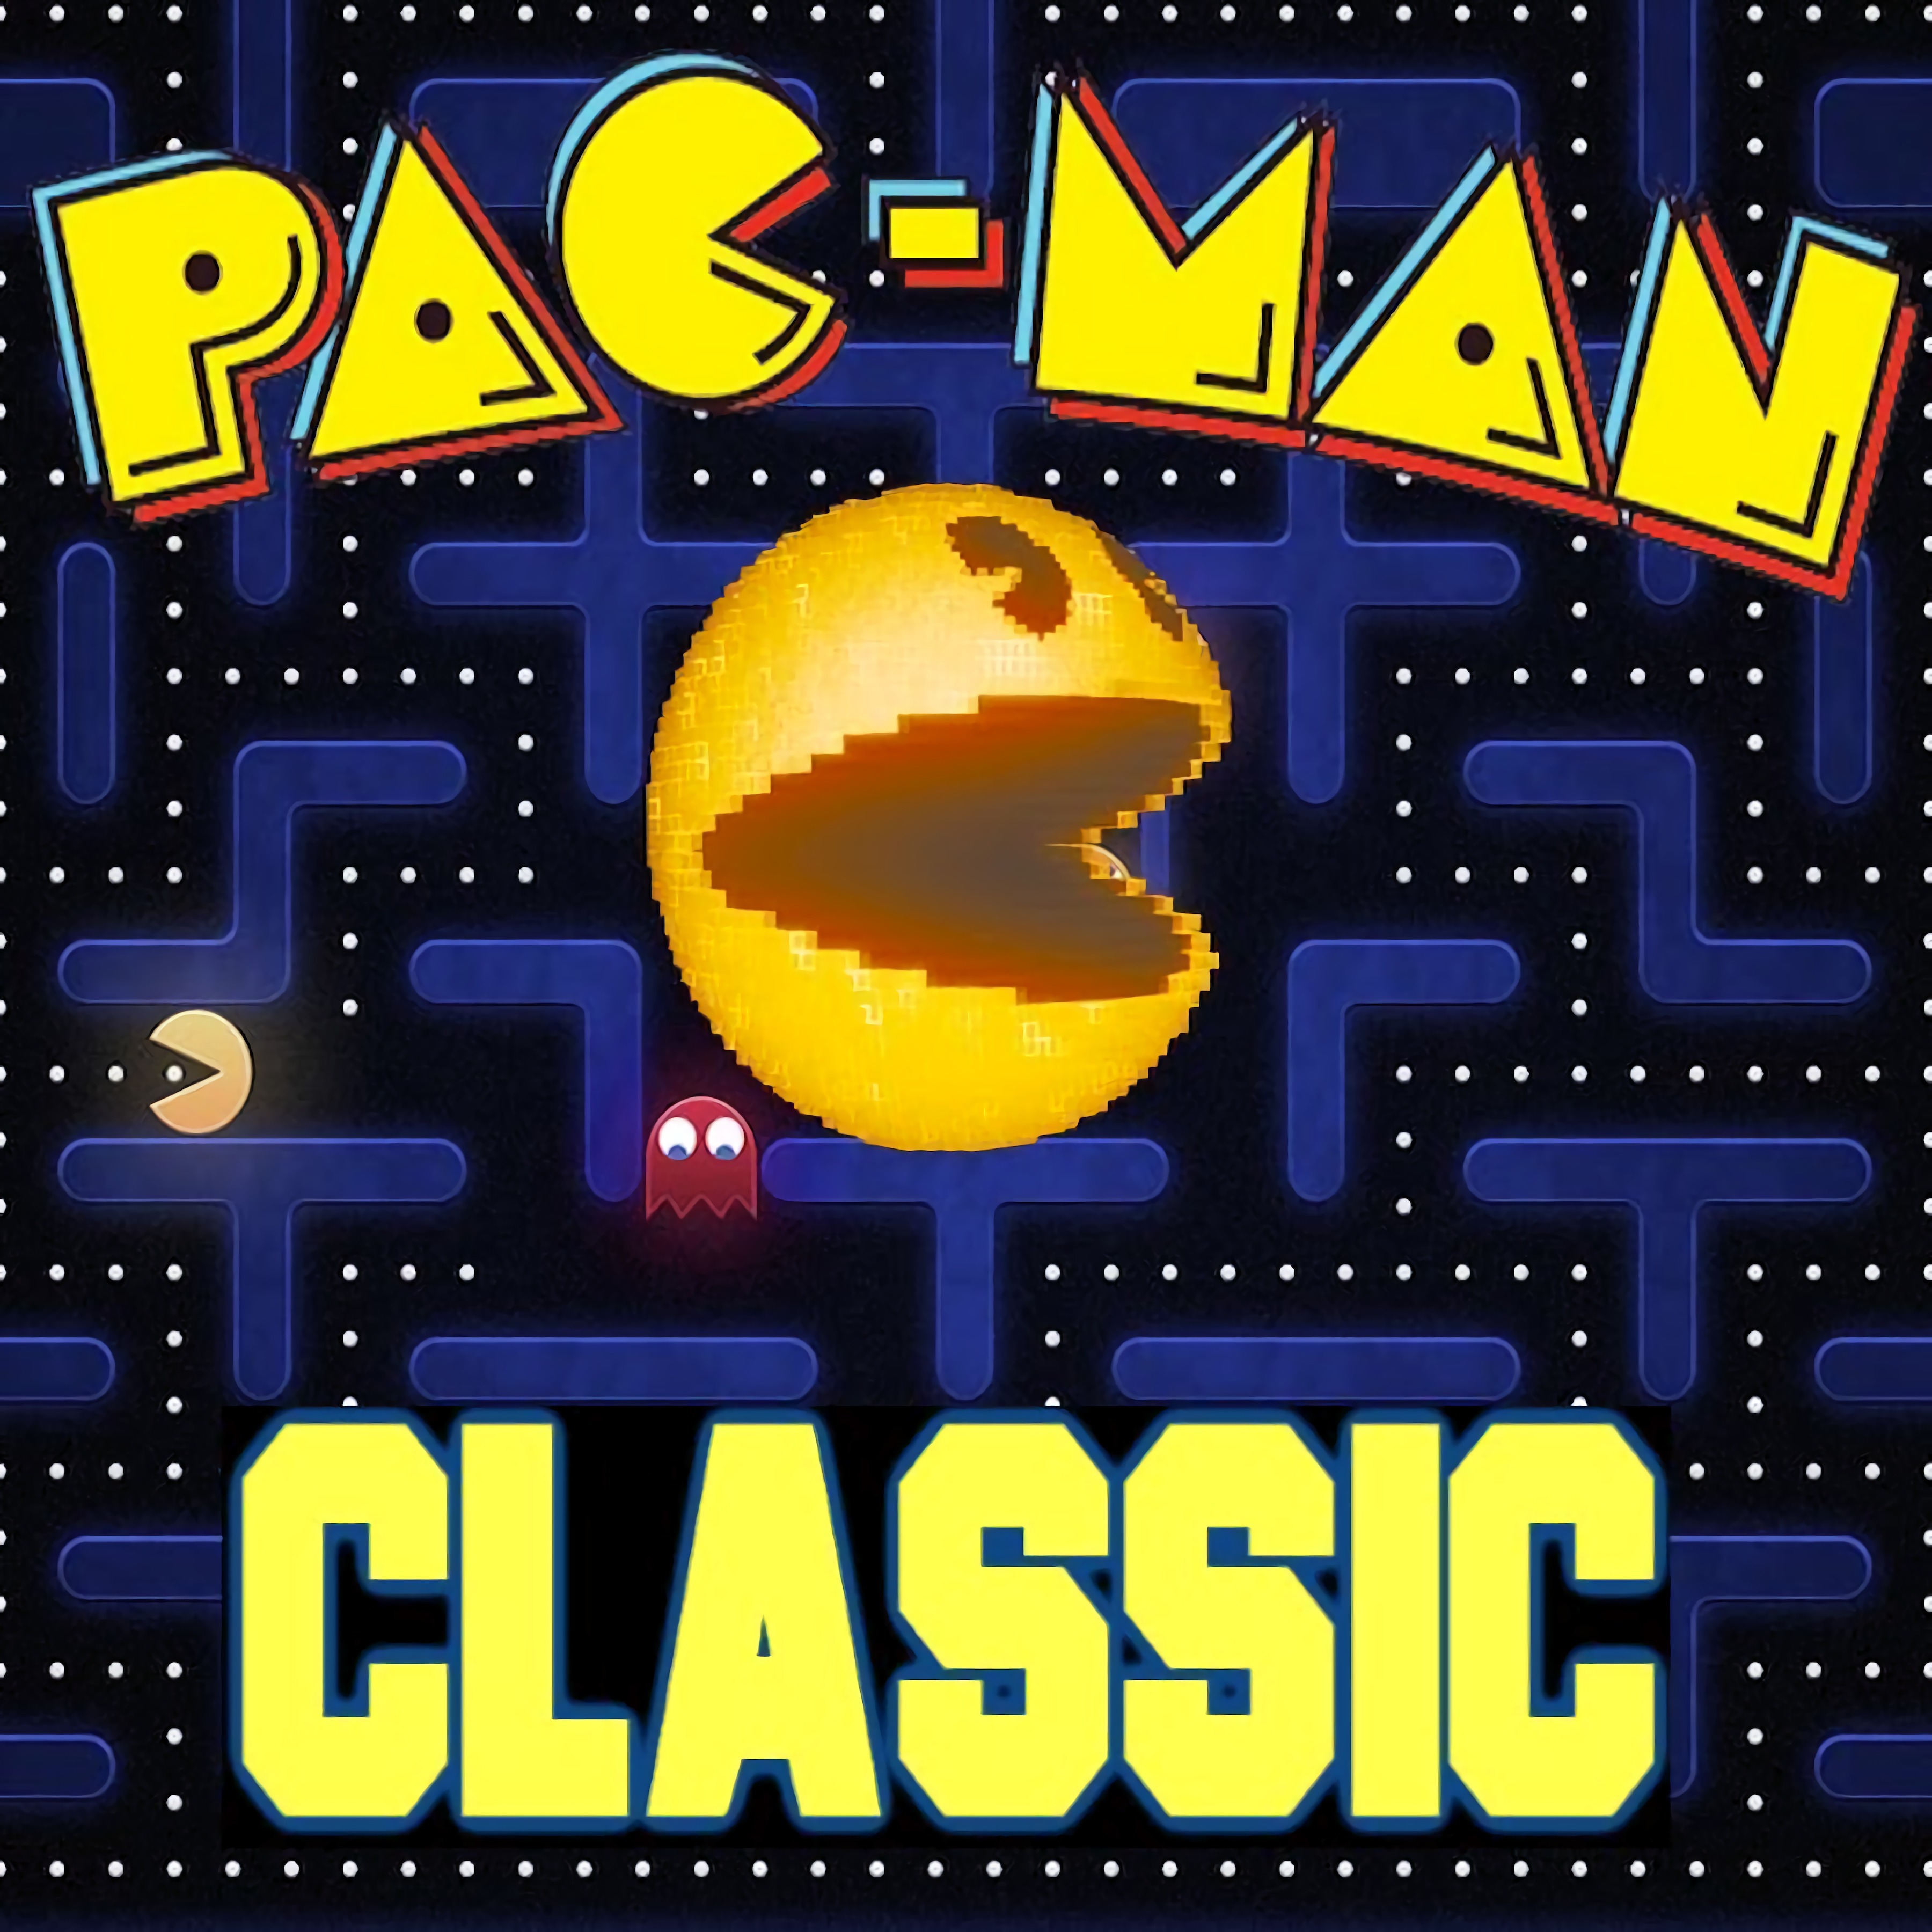 Classic Pac